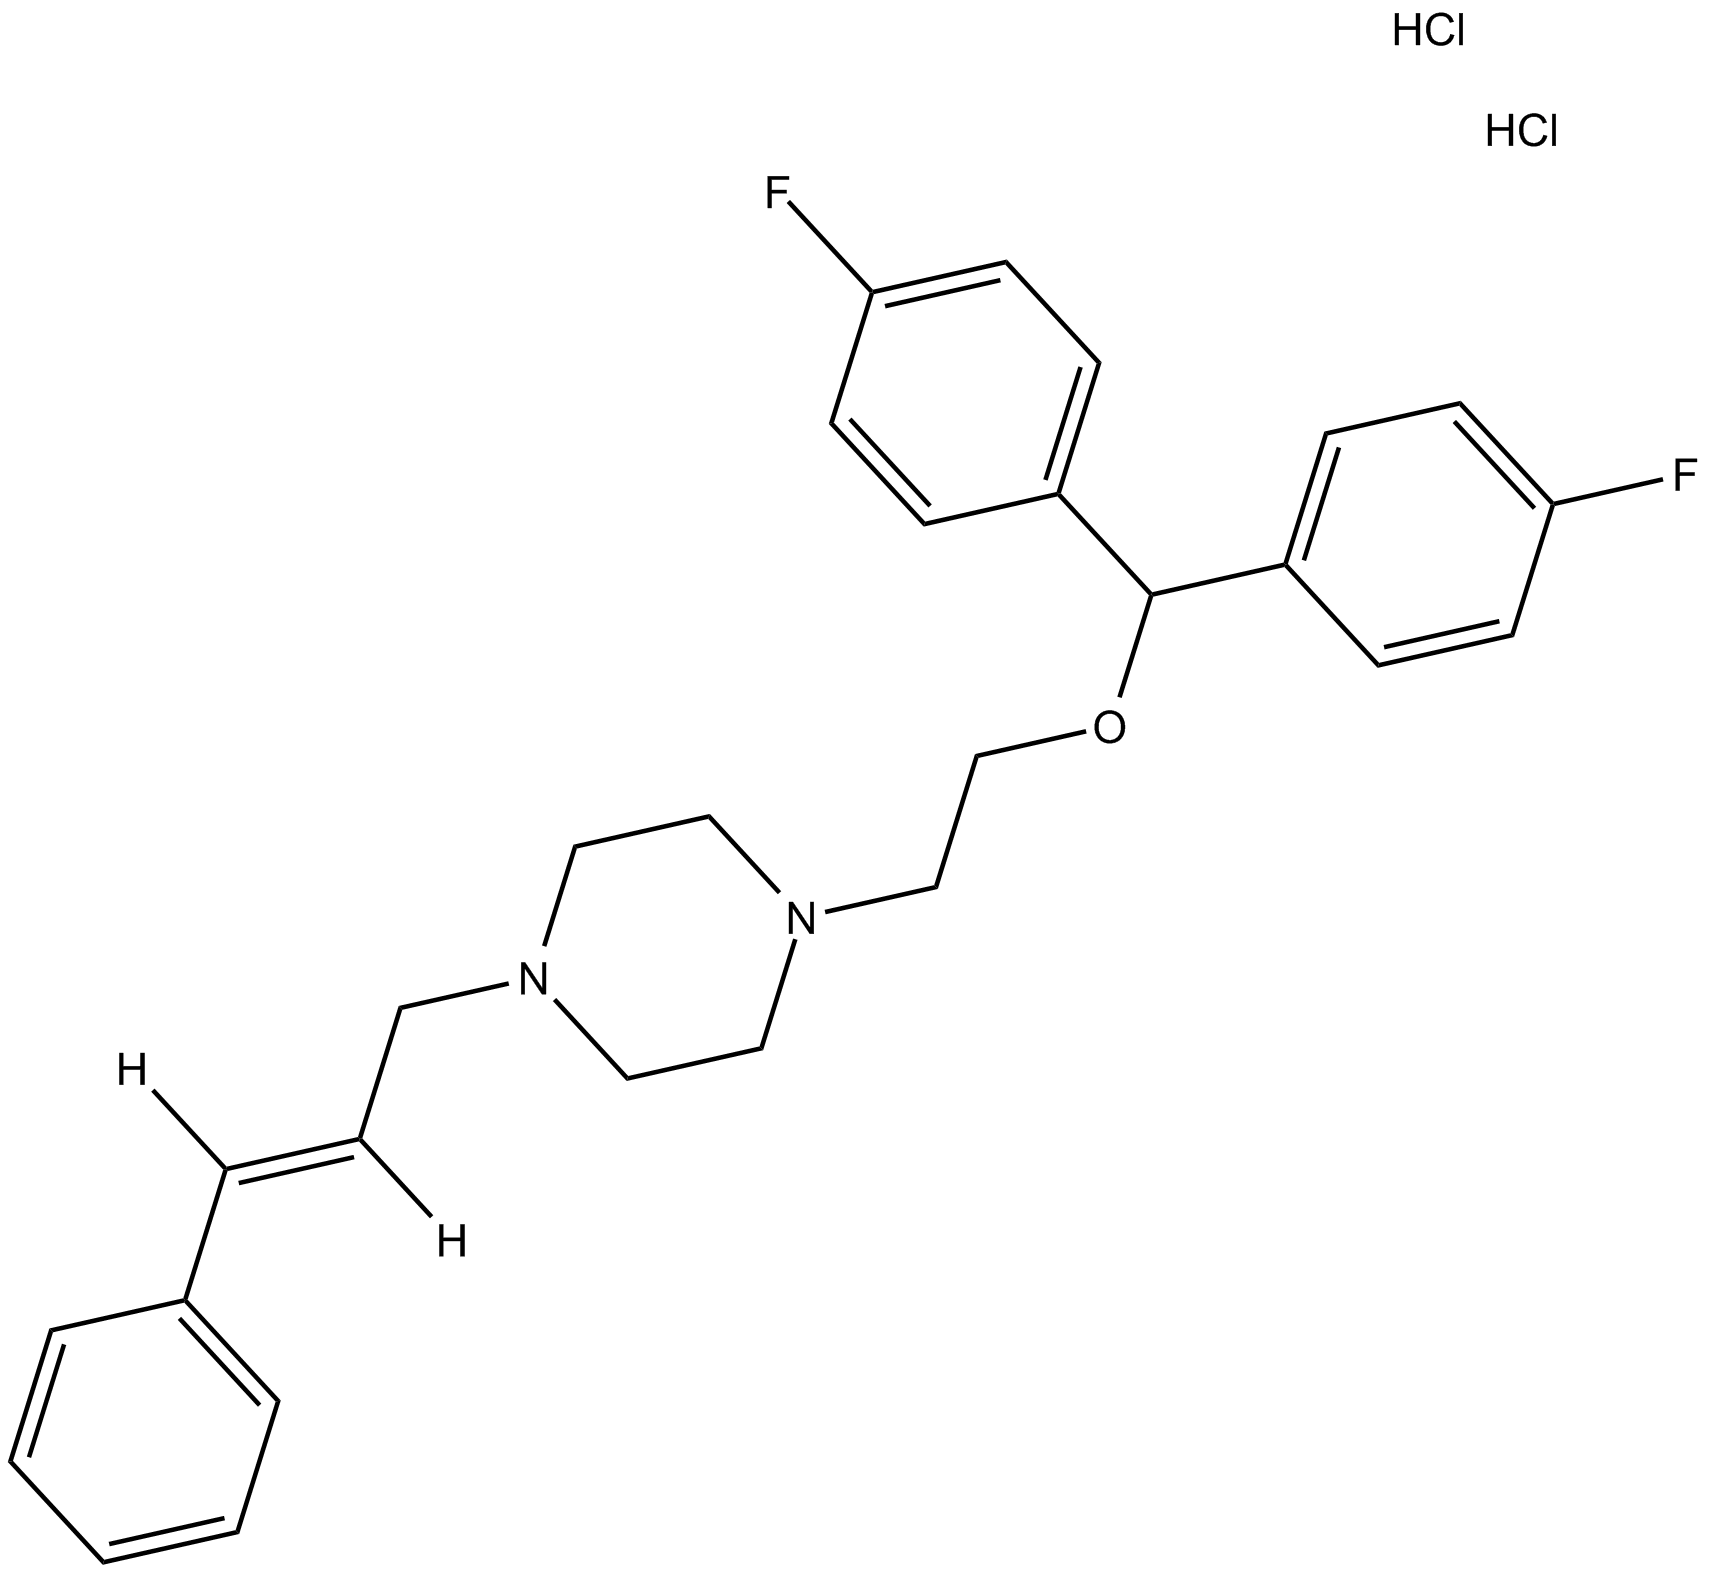 GBR 13069 dihydrochloride